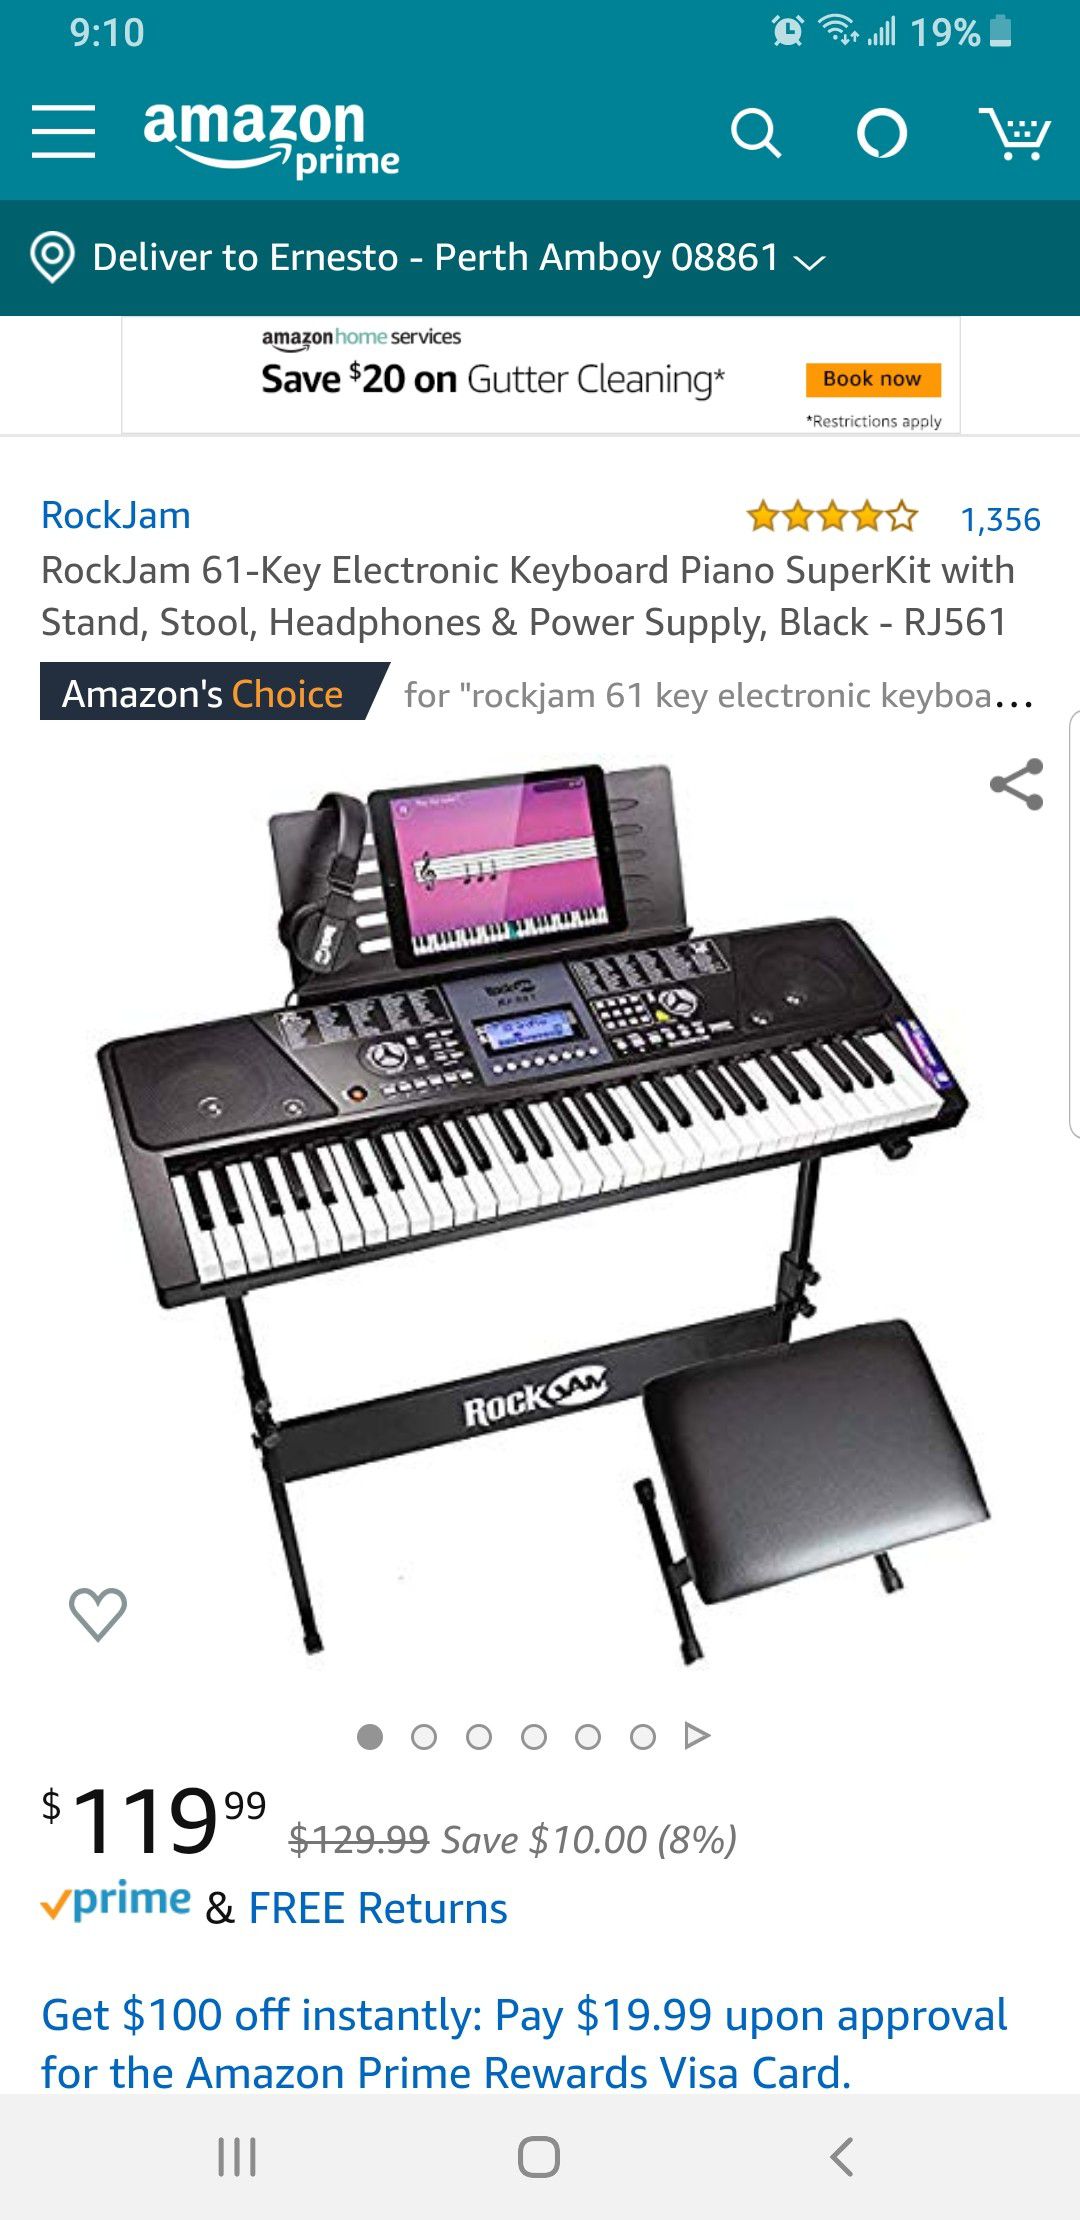 RockJam 61-Key Electronic Keyboard Piano SuperKit with Stand, Stool, Headphones